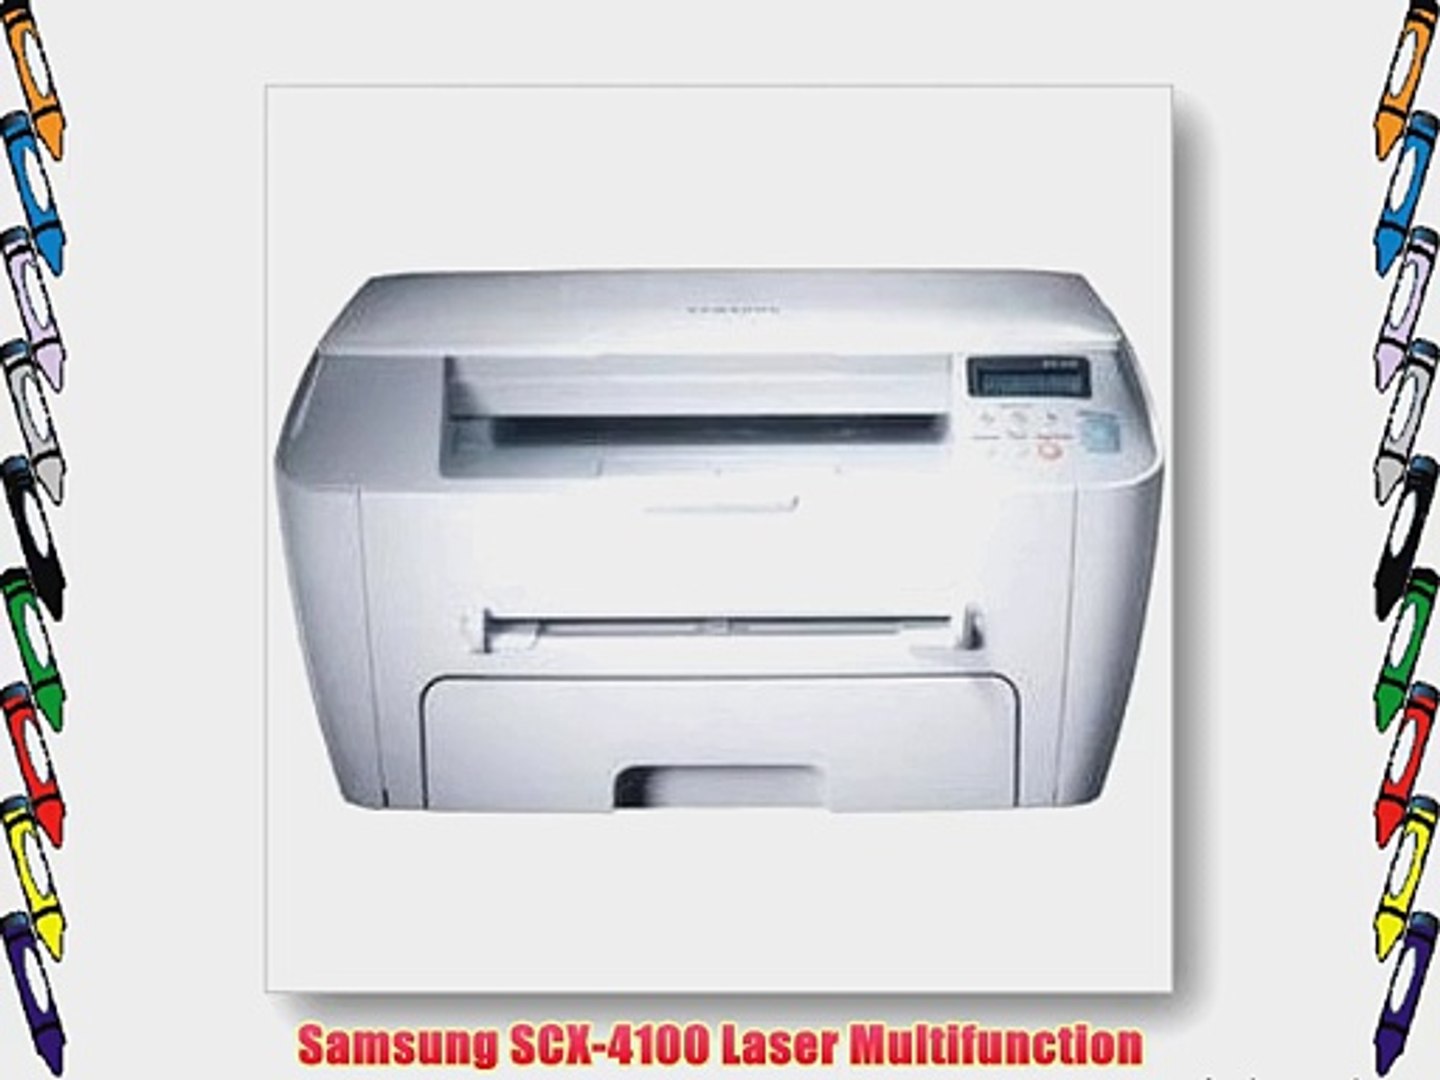 Samsung SCX-4100 Laser Multifunction - video Dailymotion